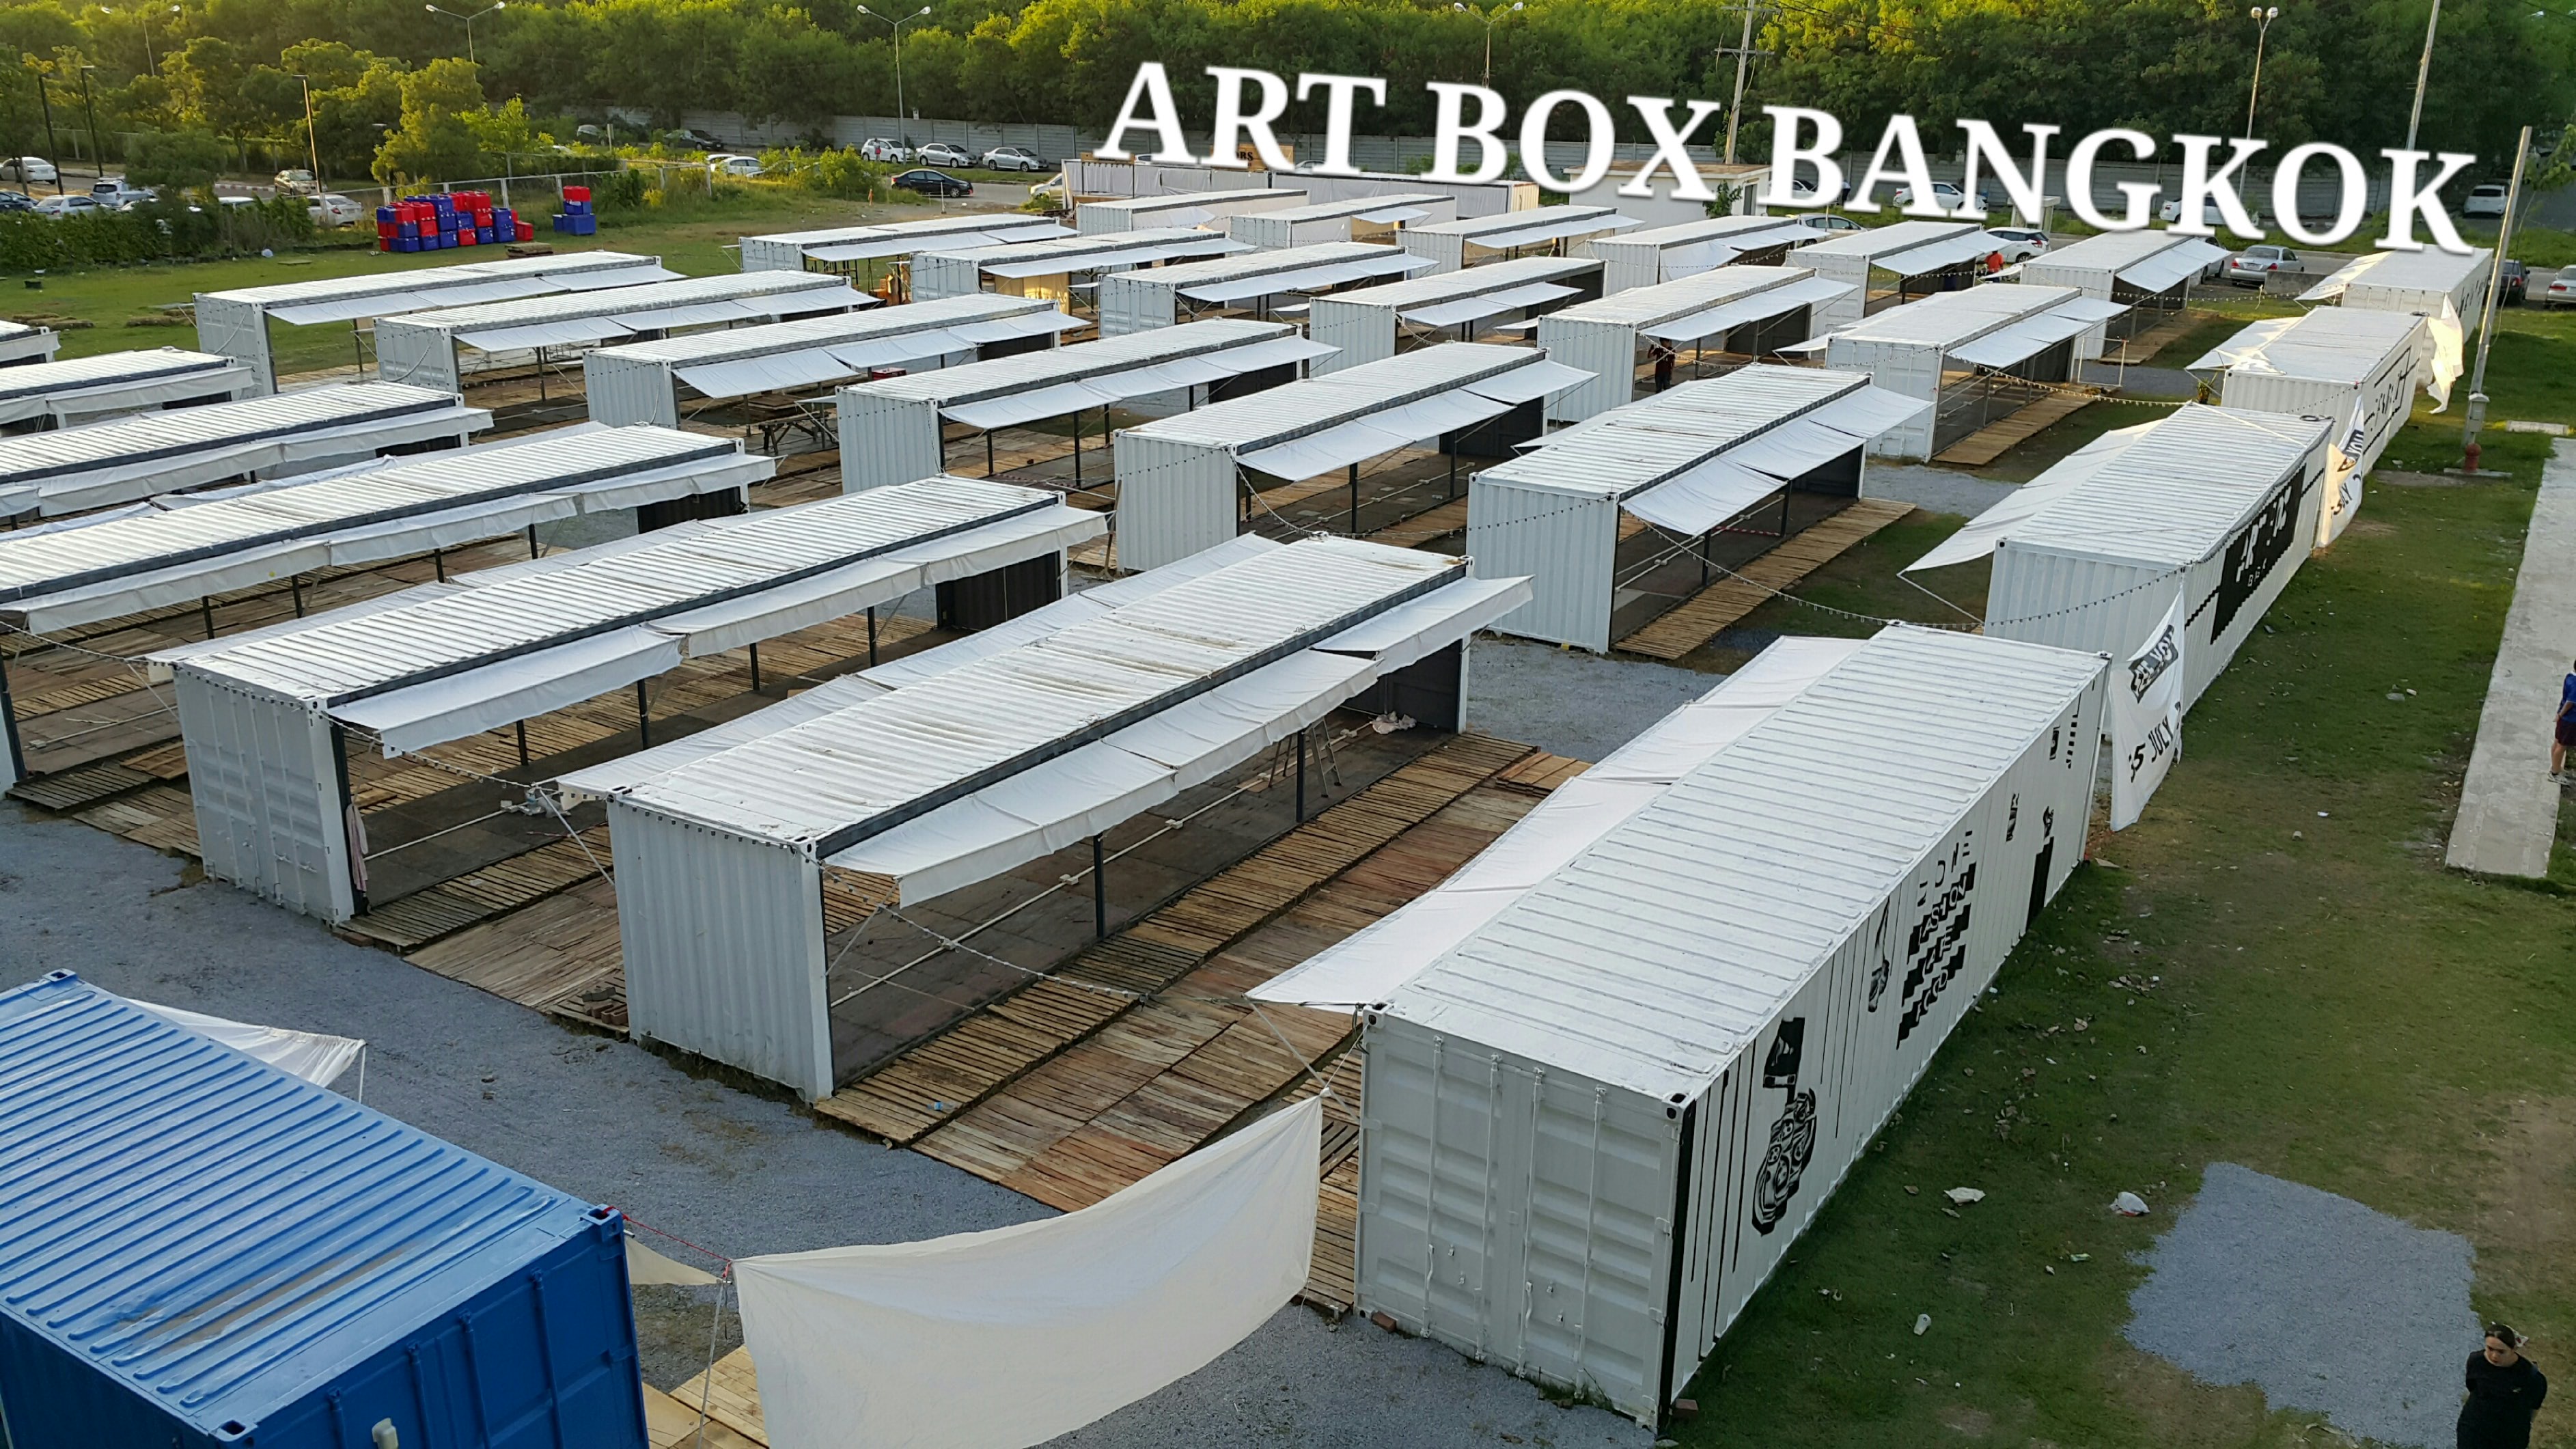 2015 07 04 15.22.59 | Art Box Bangkok | [ชวนคุยยามสาย] พาเดินชมงาน ART BOX BANGKOK ตลาดคอนเทรนเนอร์แห่งแรกของไทย